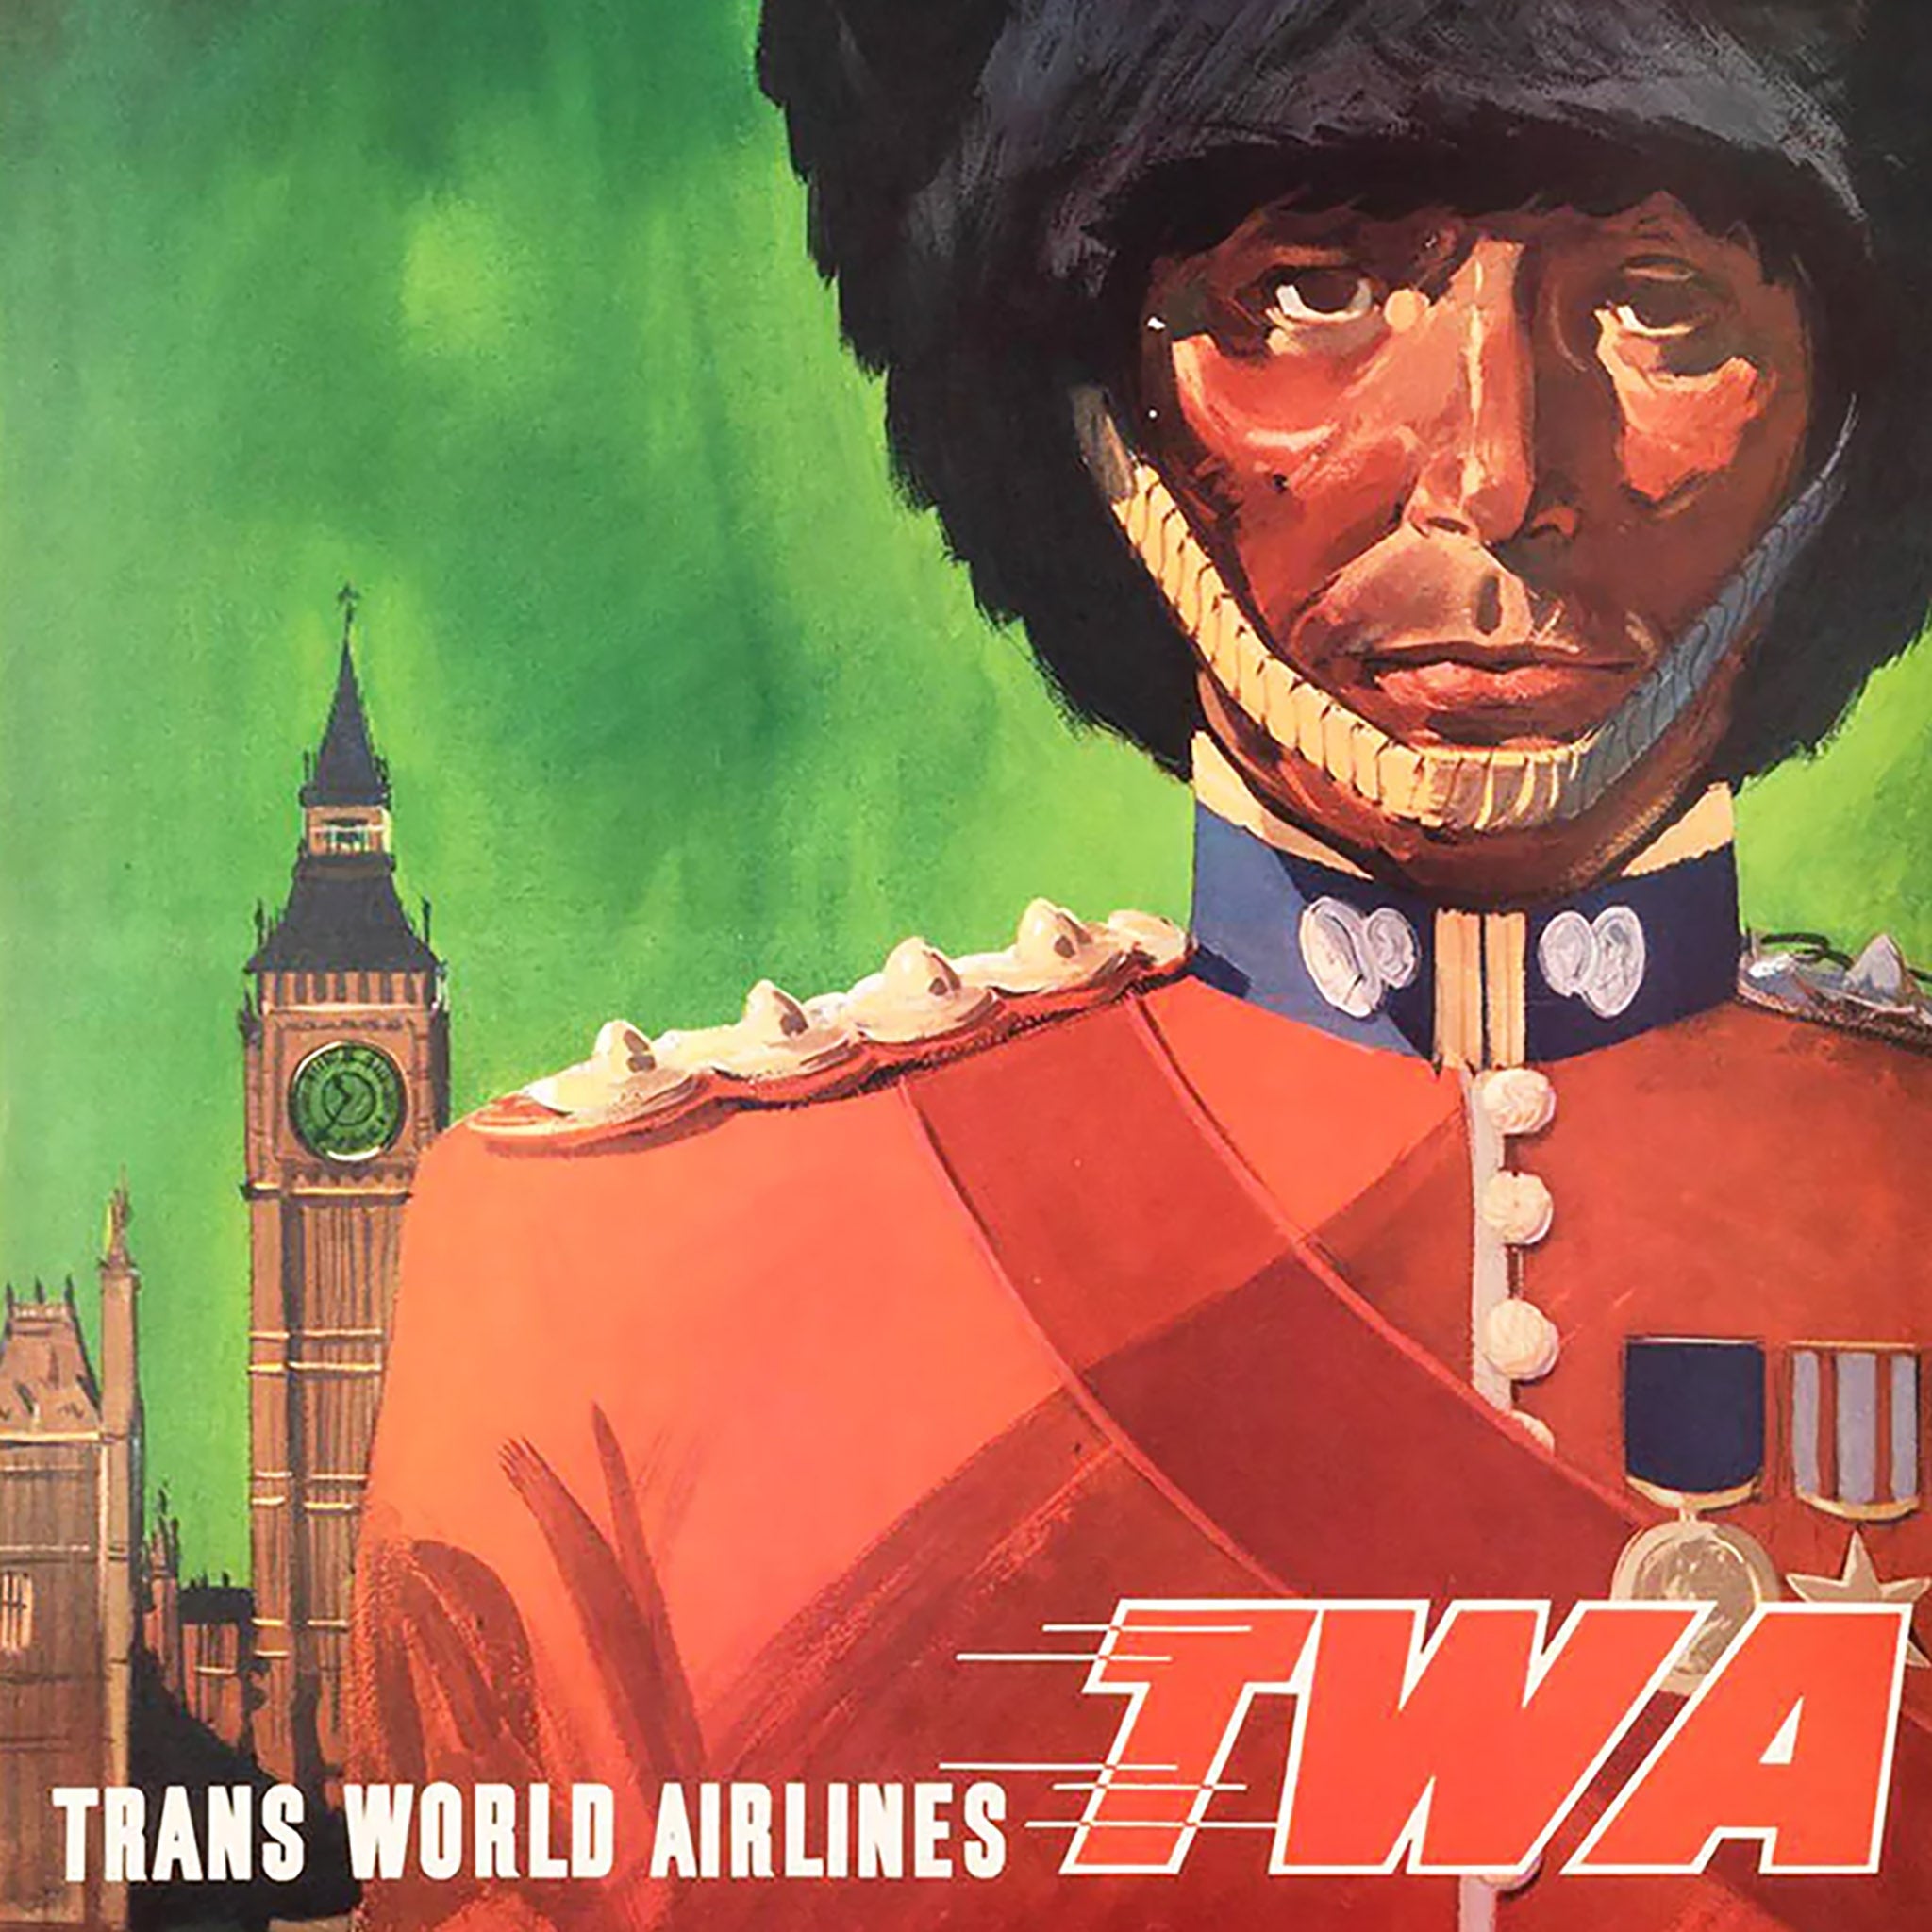 Trans World Airlines London Original Poster